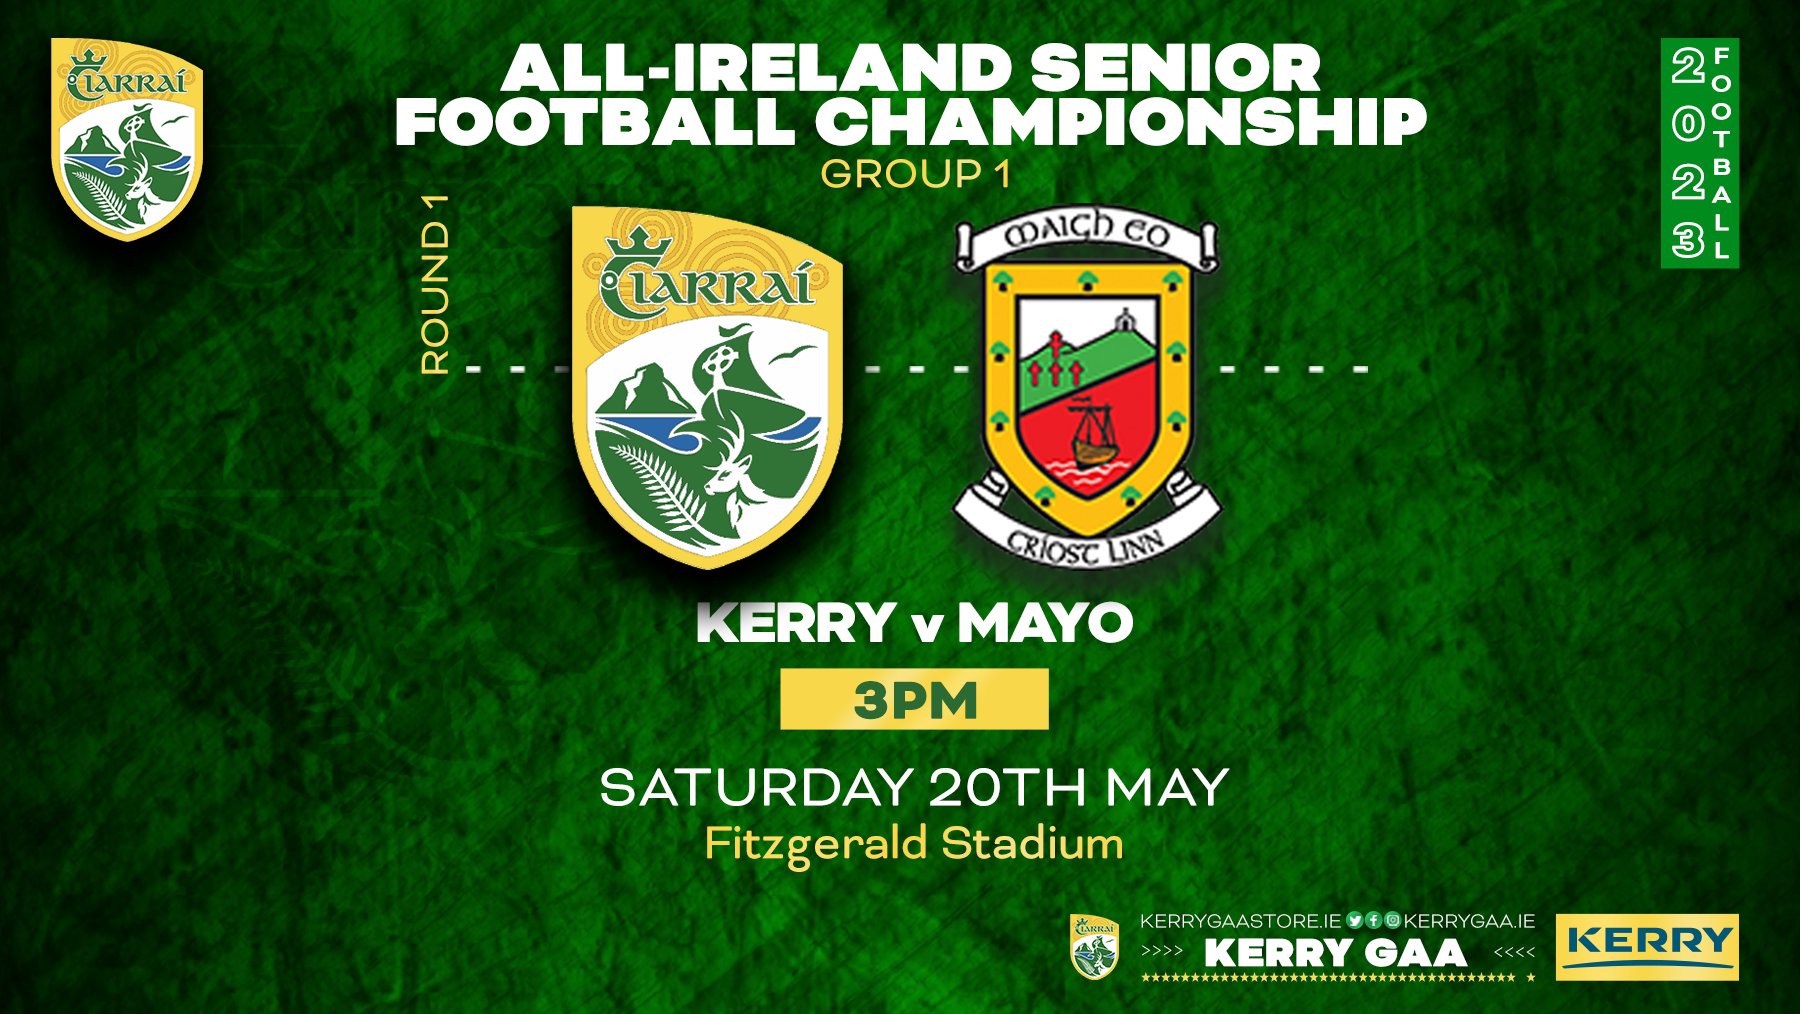 Kerry vs Mayo – Match Information